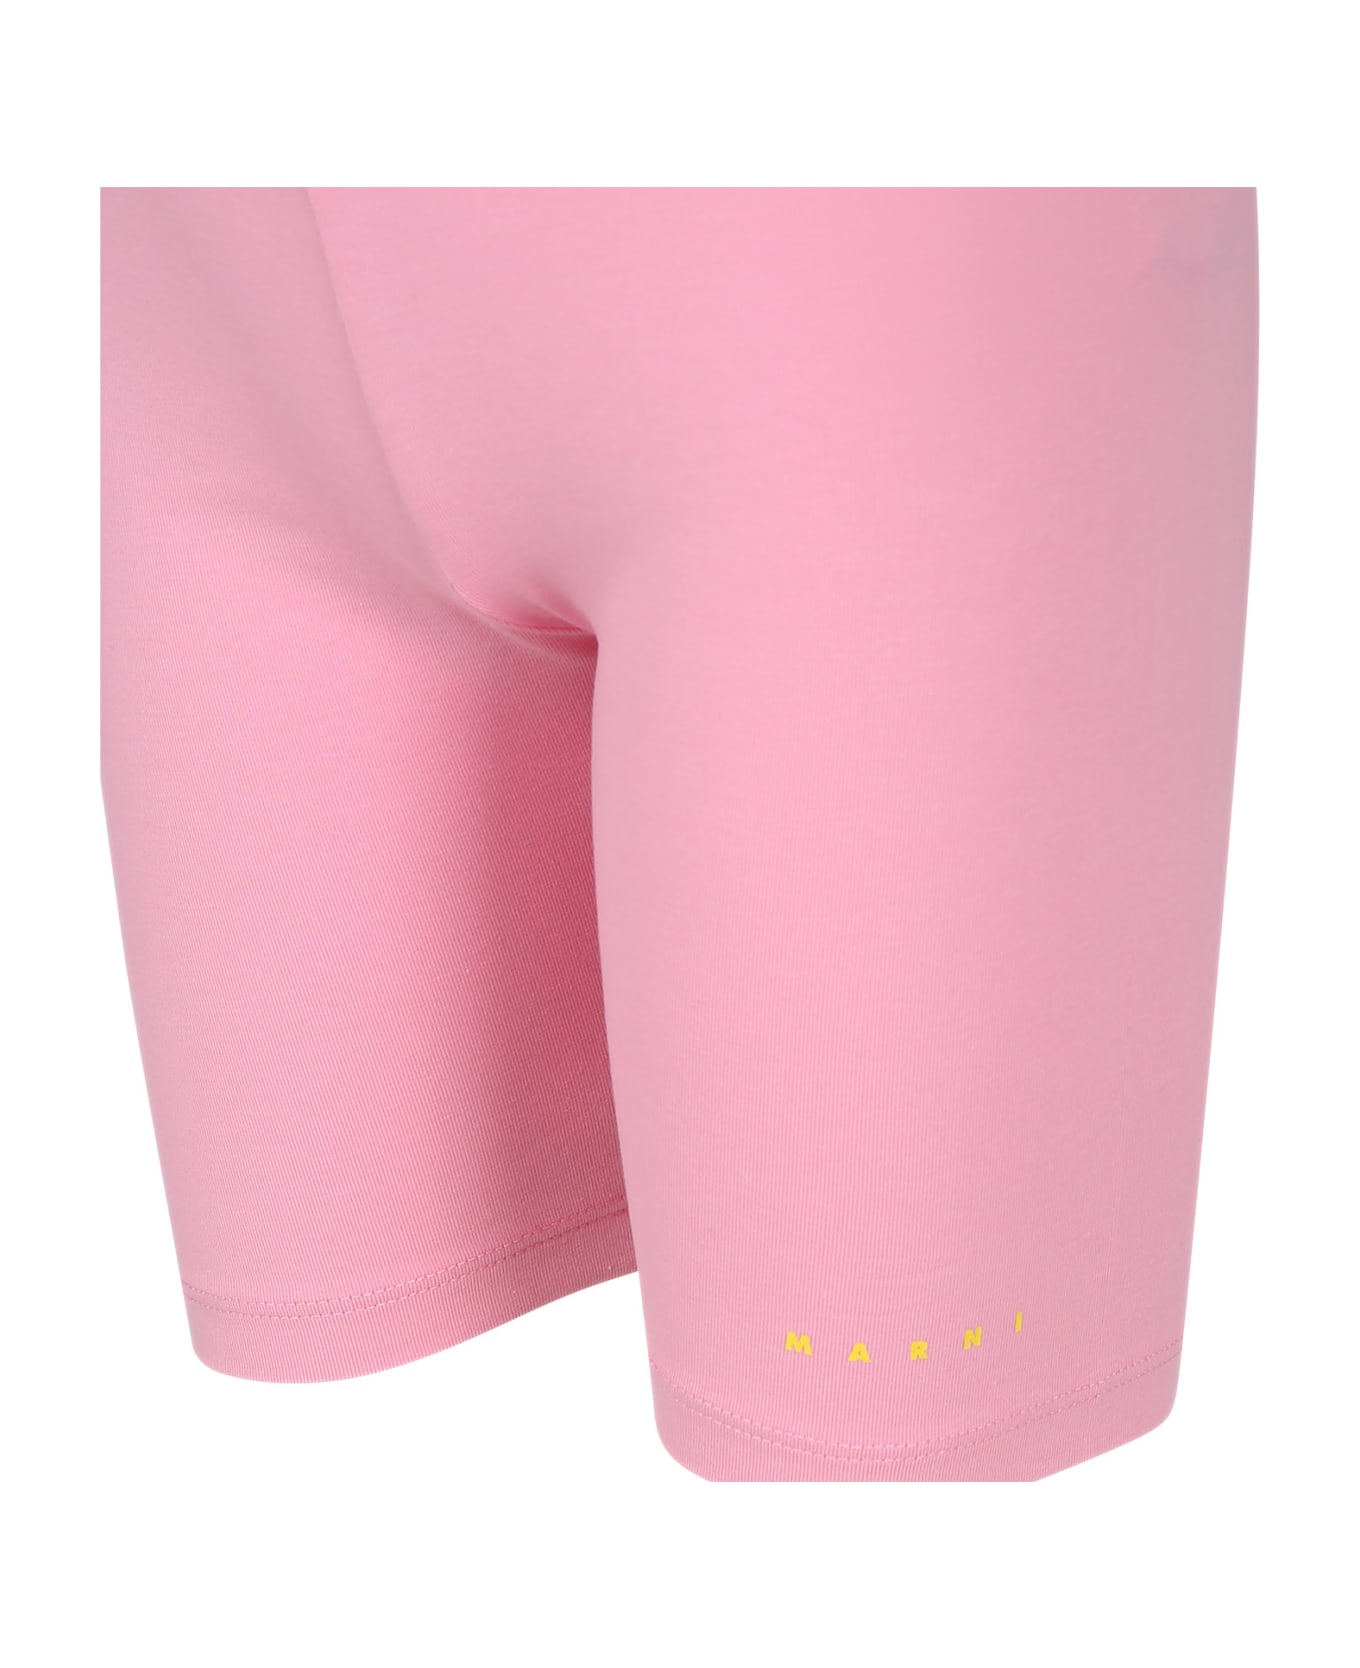 Marni Pink Sports Shorts For Girl - Pink